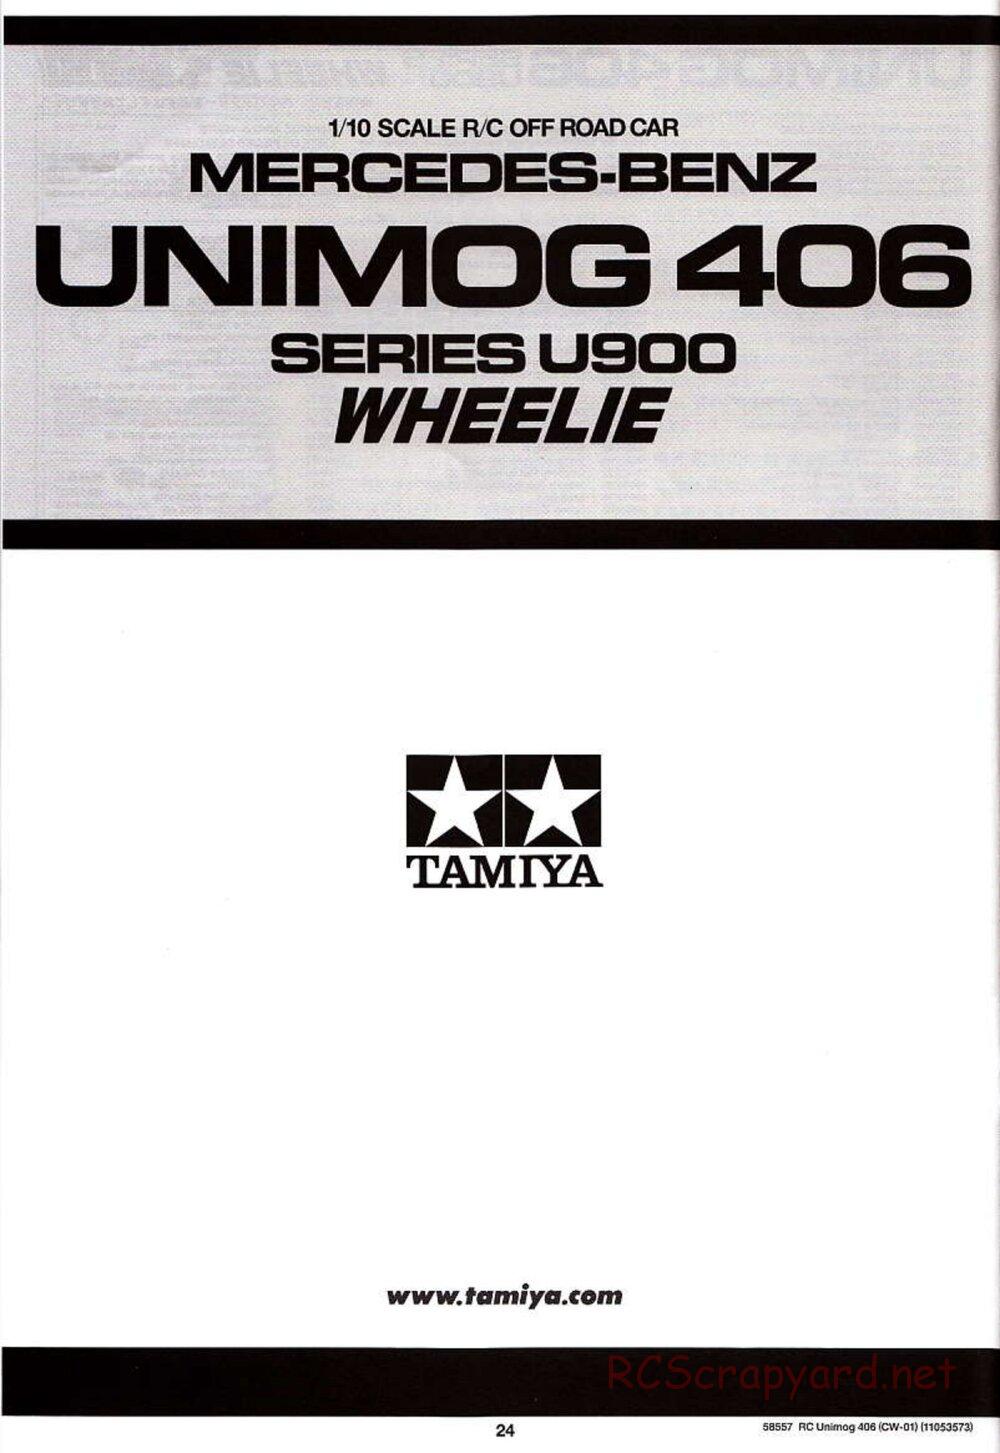 Tamiya - Mercedes-Benz Unimog 406 Series U900 - CW-01 Chassis - Manual - Page 24